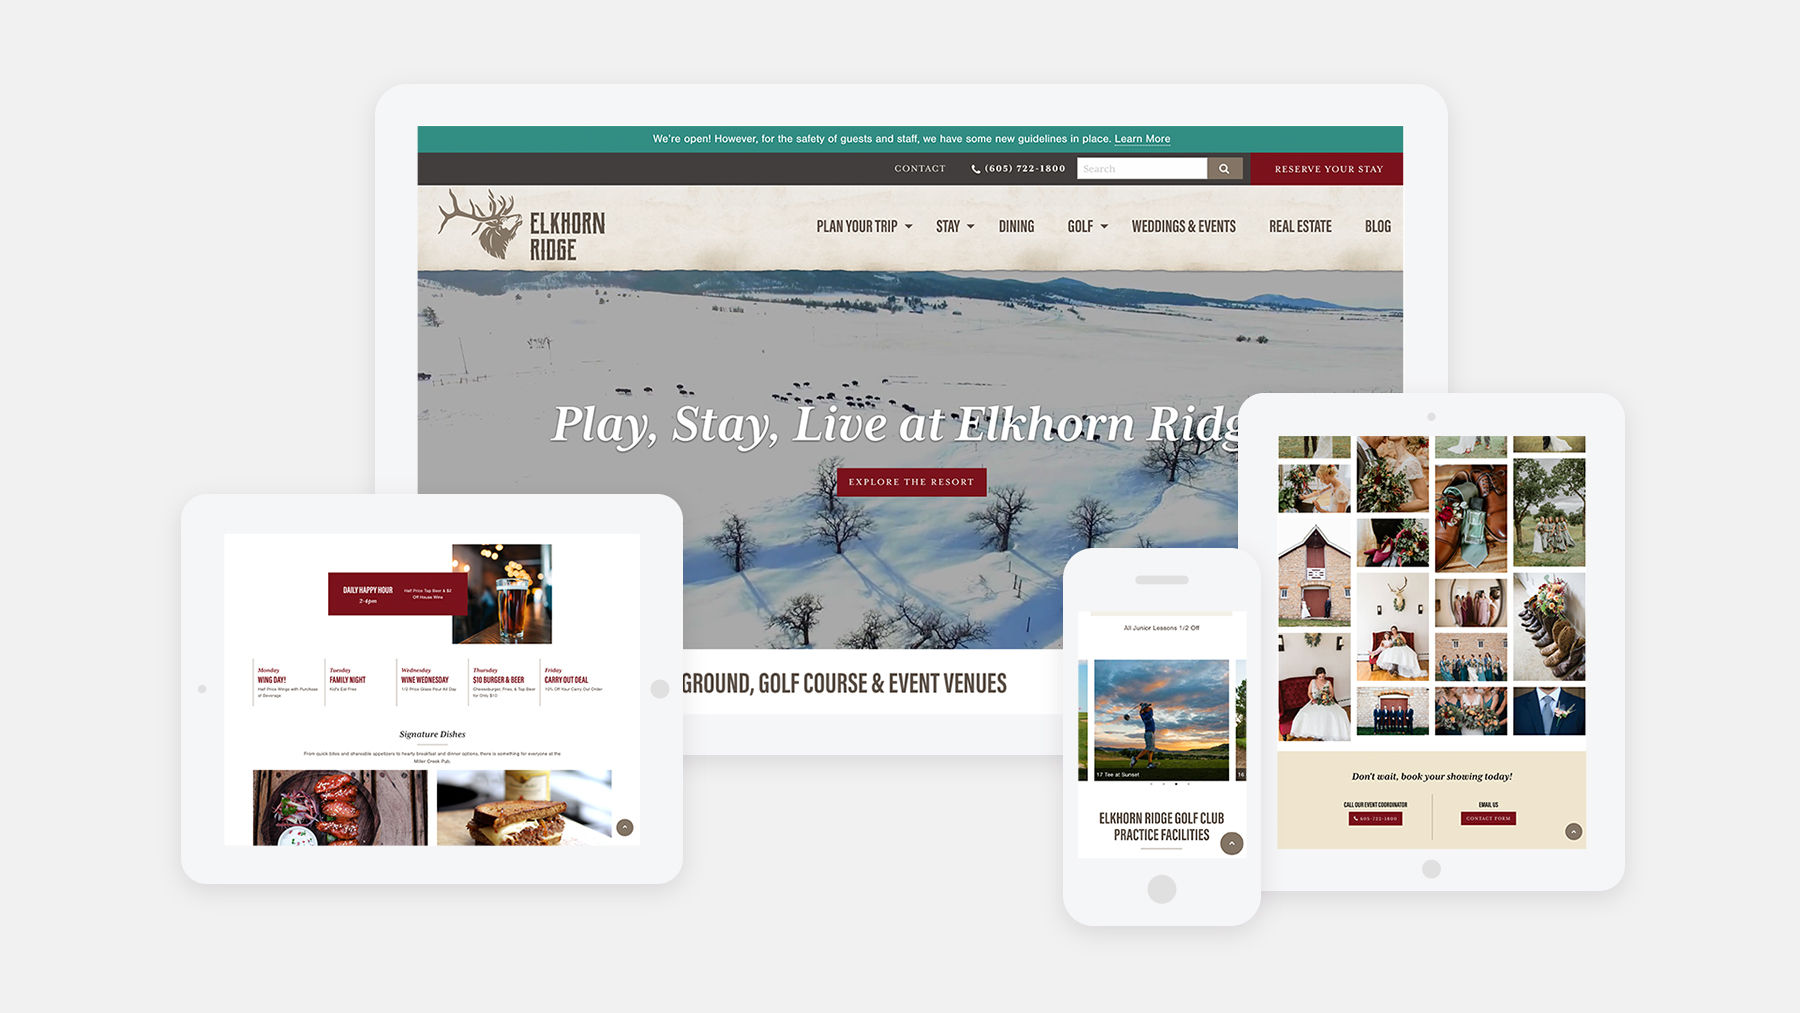 Elkhorn Ridge website on 4 devices: desktop, ipad vertical, ipad landscape, and mobile